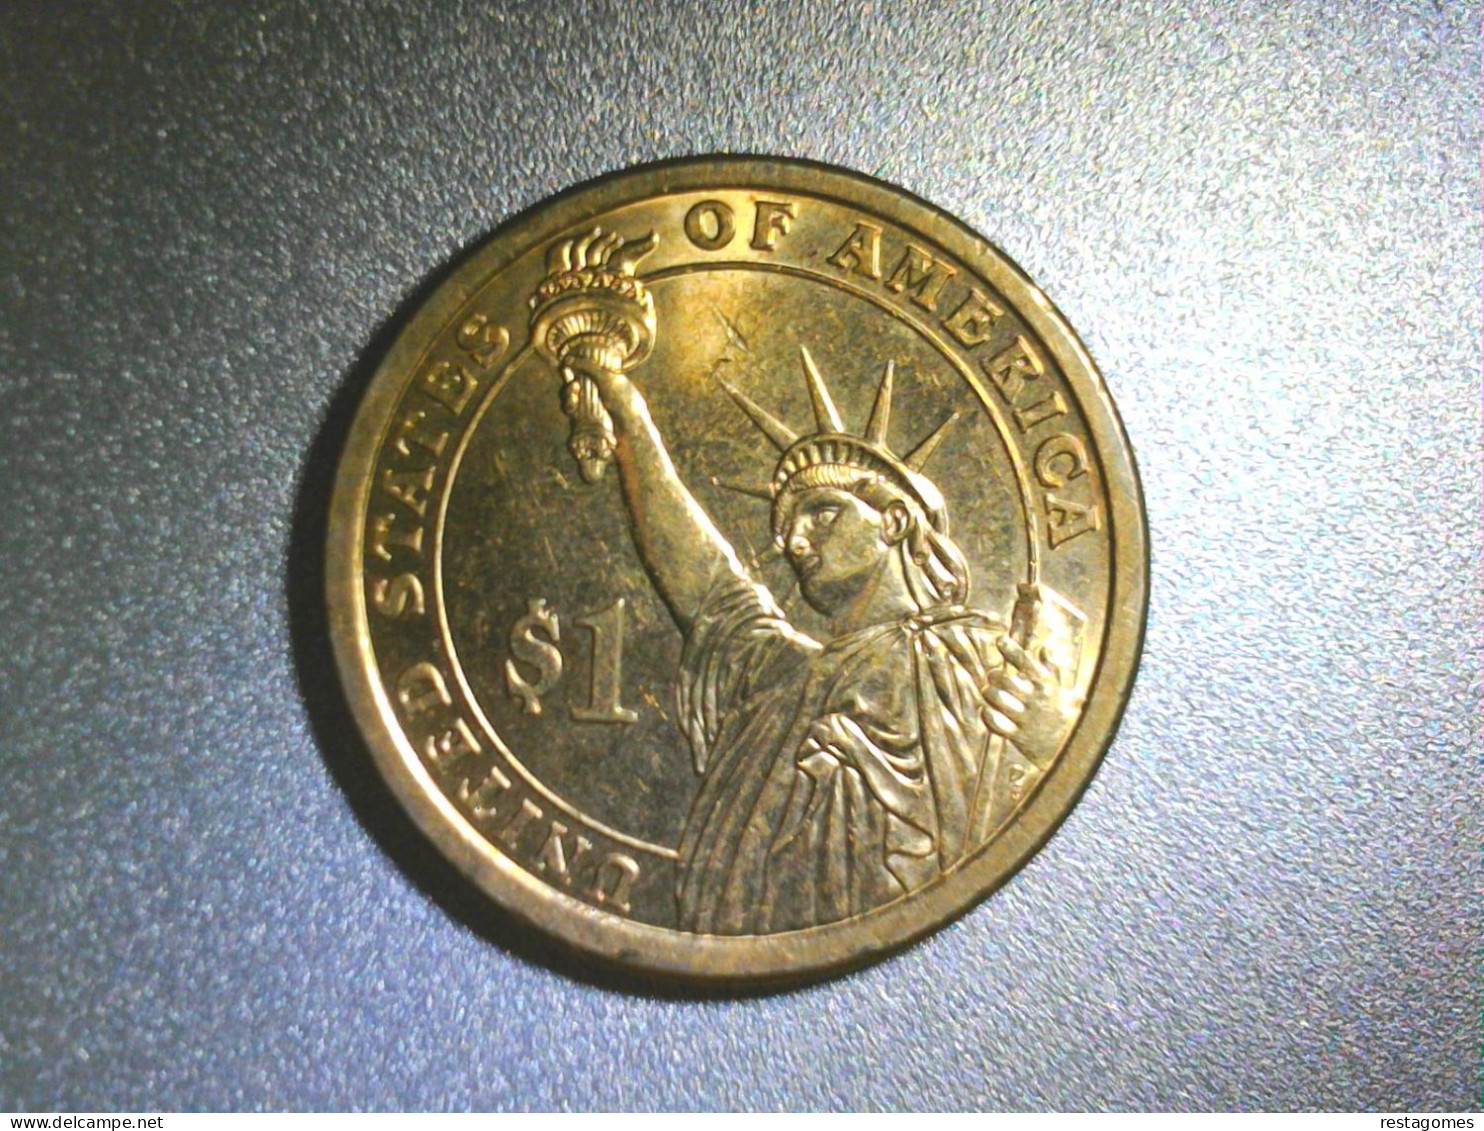 USA - Dollar 1/4 Dollar George Washington - Centraal-Amerika